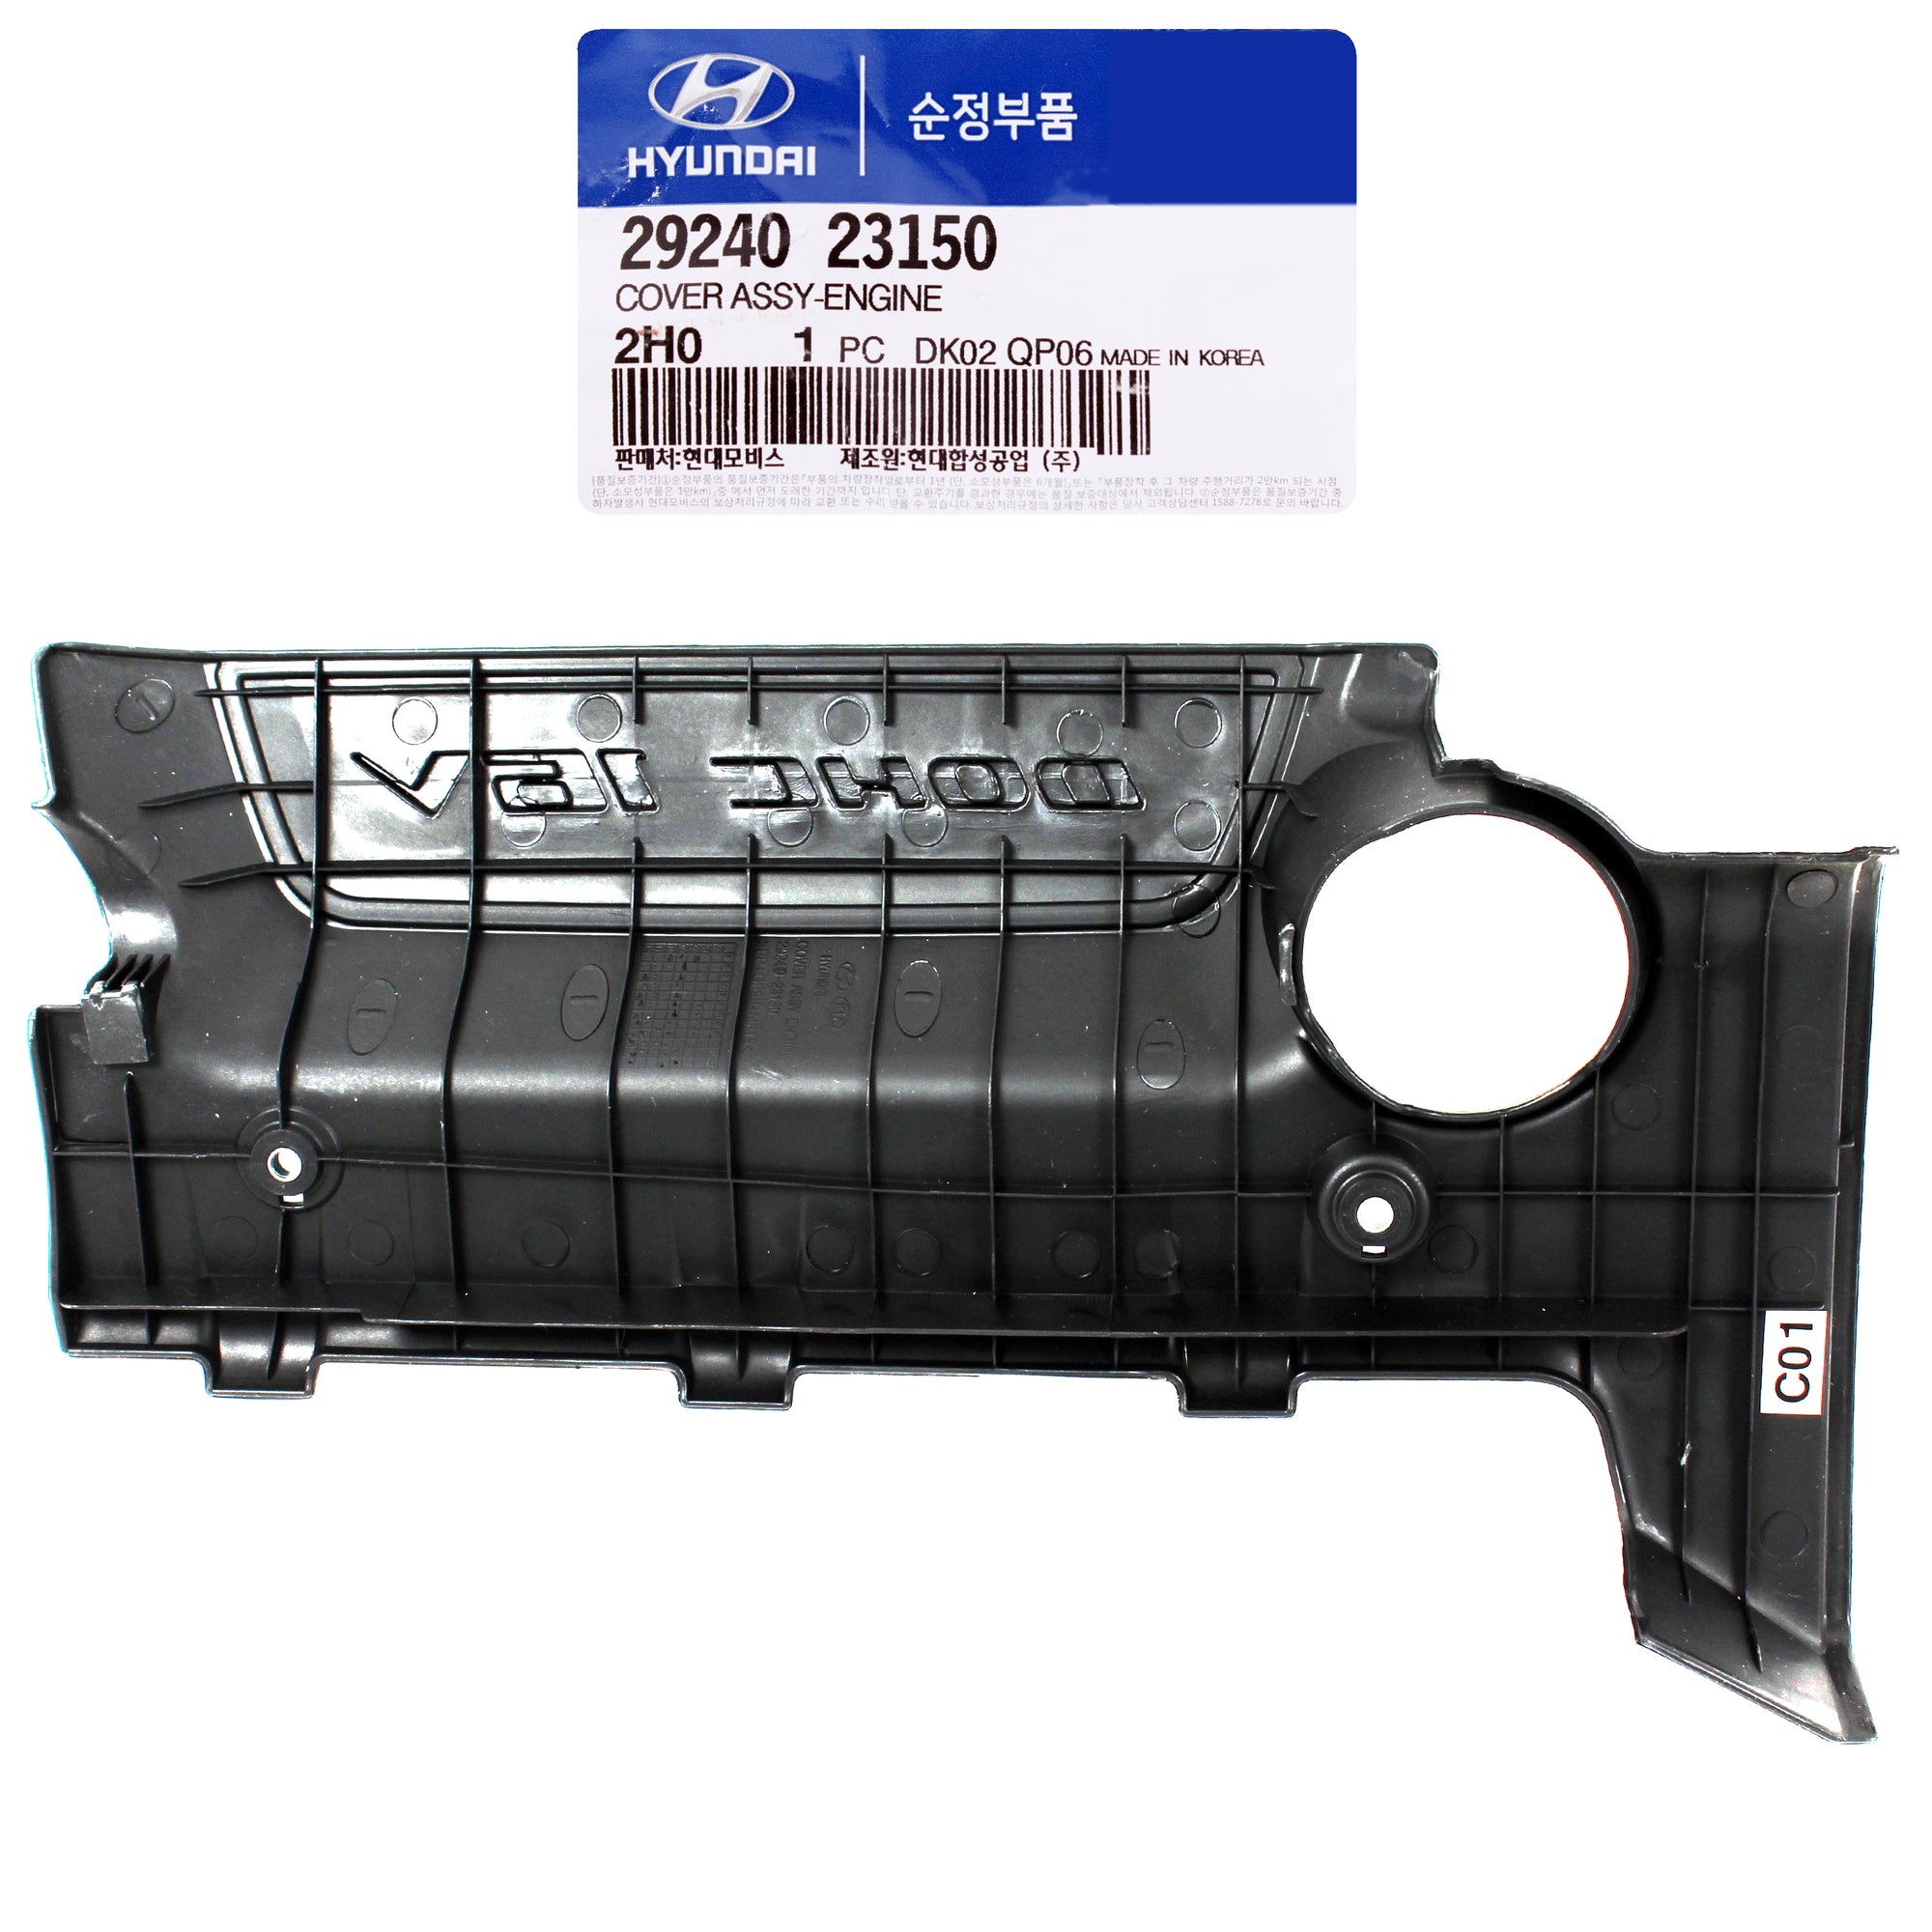 Engine Cover for Hyundai Elantra Tucson Sportage 2.0L OEM 29240 23150